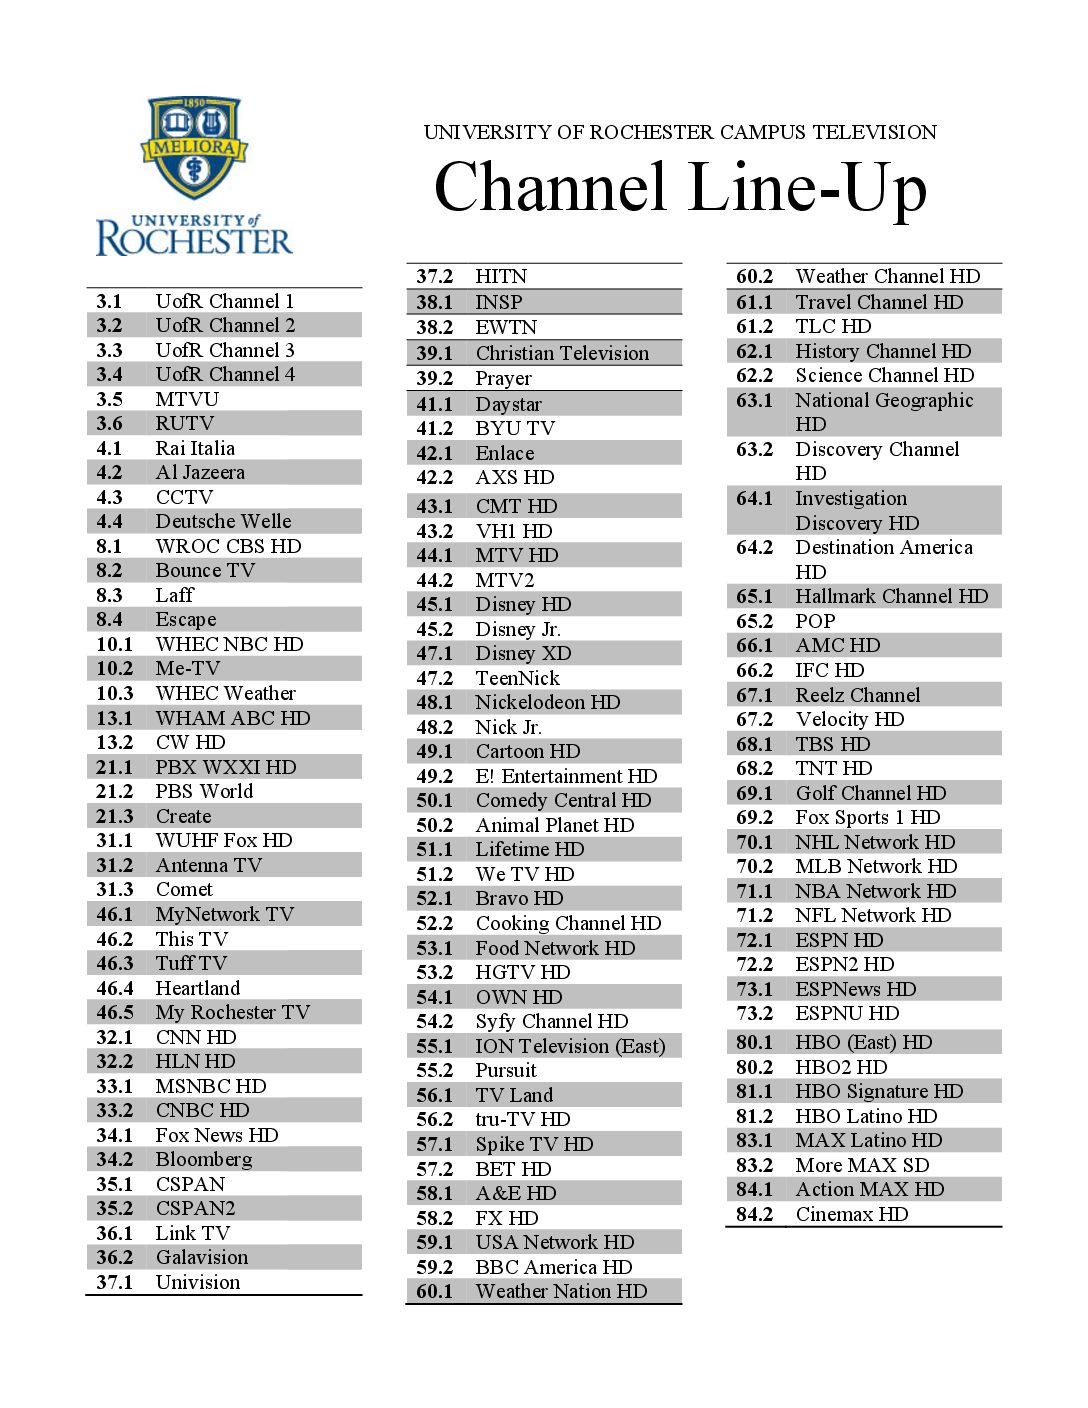 DISH Channel Lineup - University IT